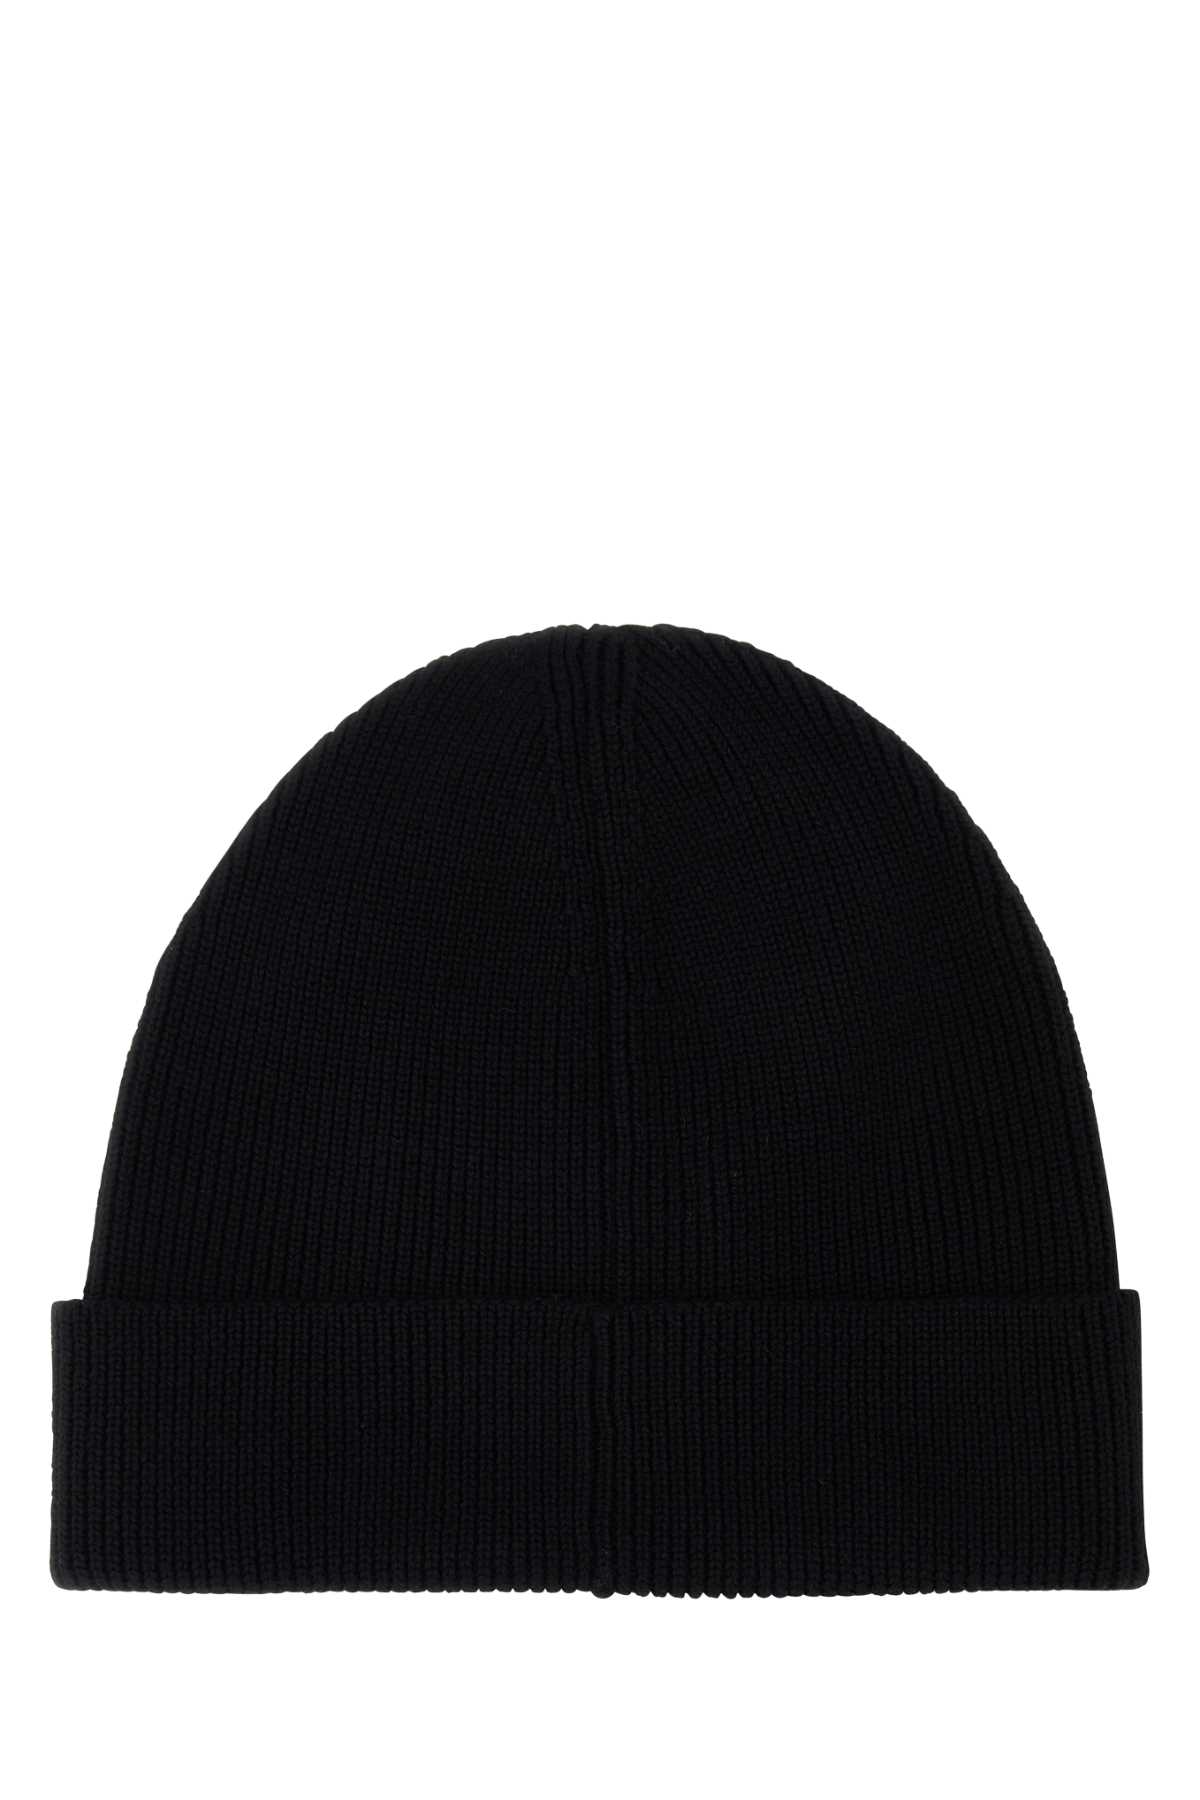 Ambush Black Wool Beanie Hat In Tapshoes